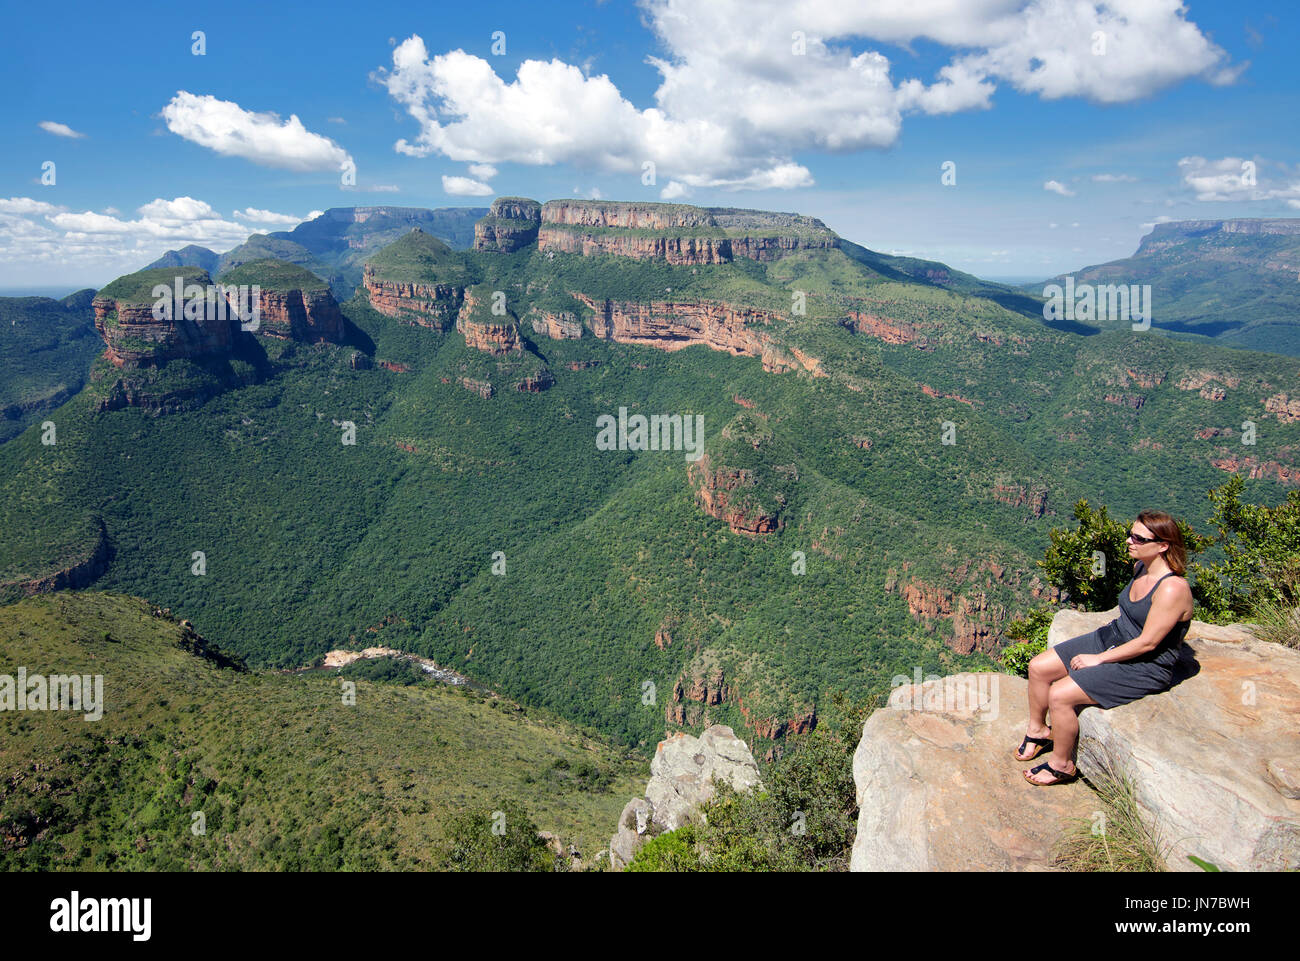 Mädchen auf Rock drei Rondavels Hintergrund Blyde River Canyon Mpumalanga Südafrika Stockfoto